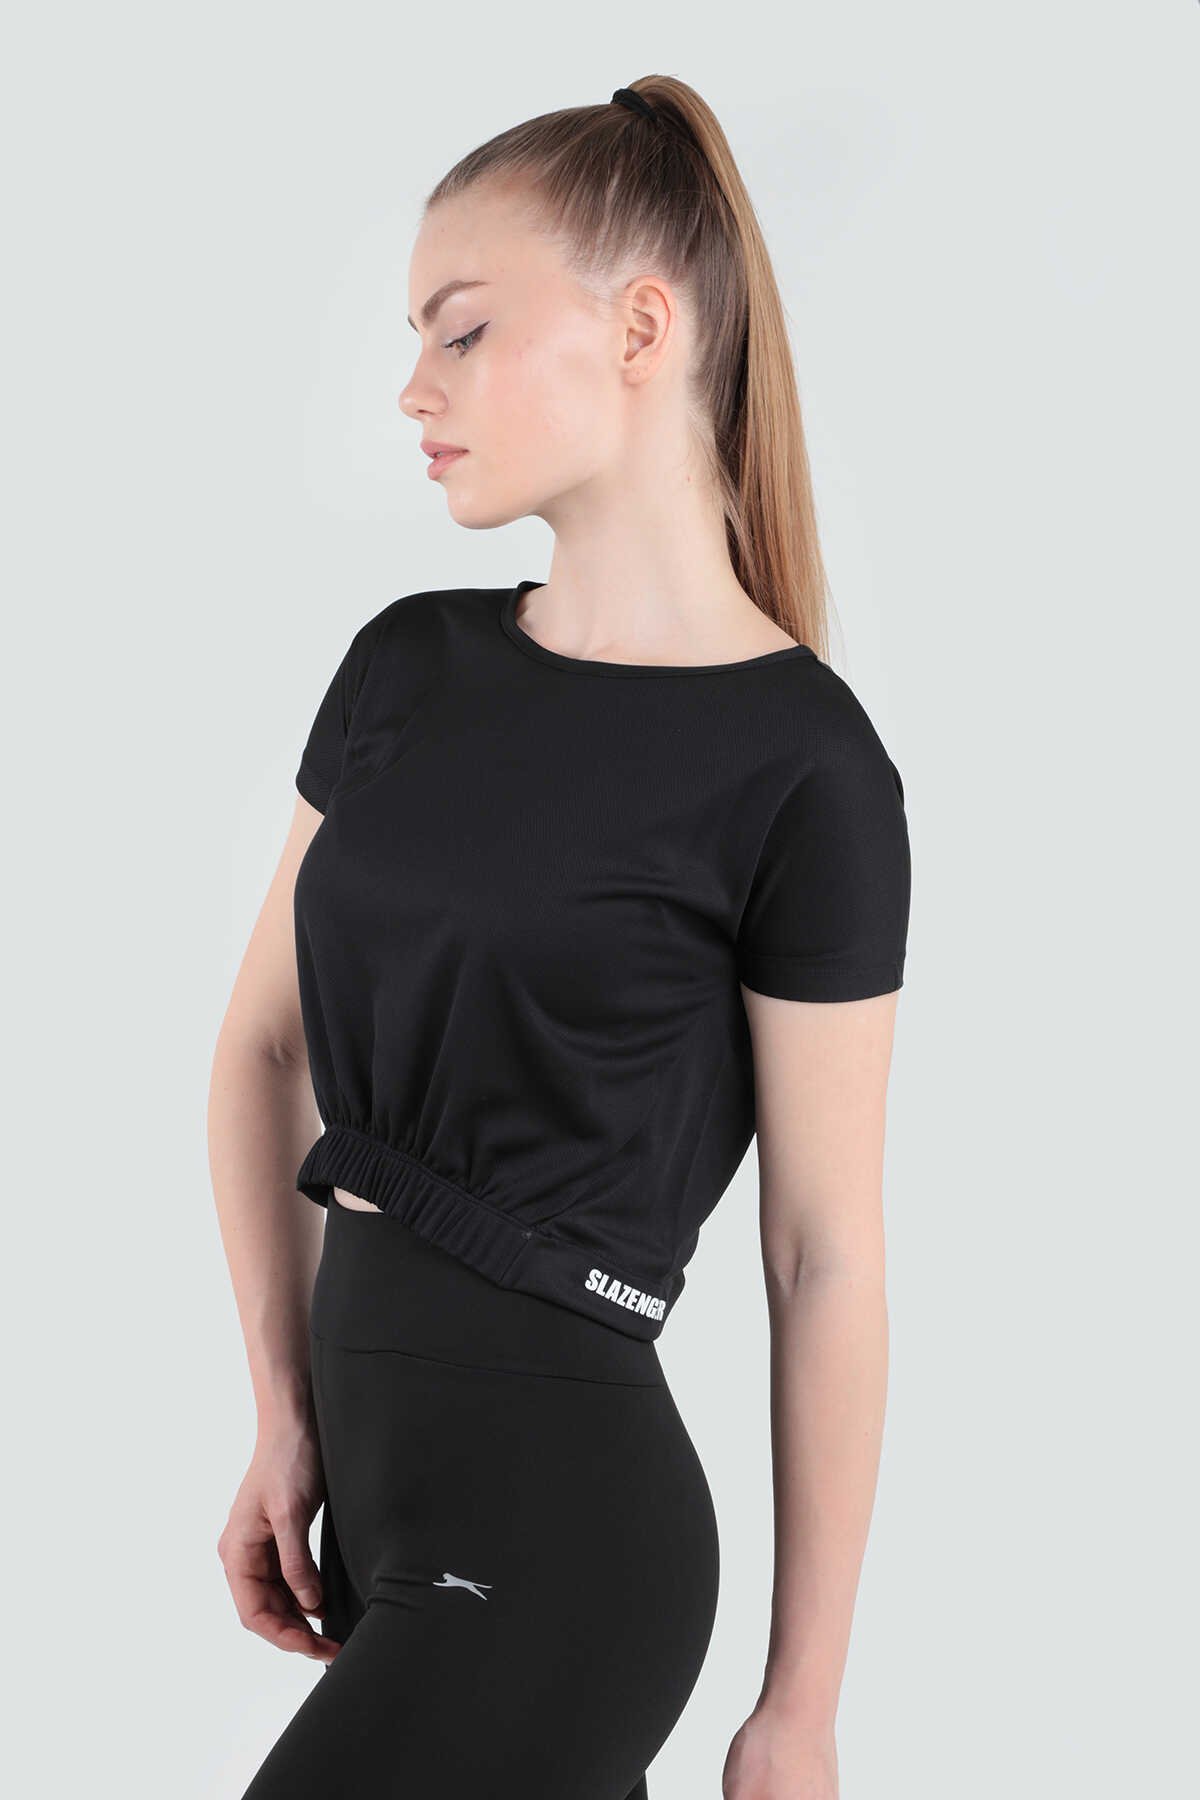 Slazenger - Slazenger GERSHOM Kadın Fitness T-Shirt Siyah